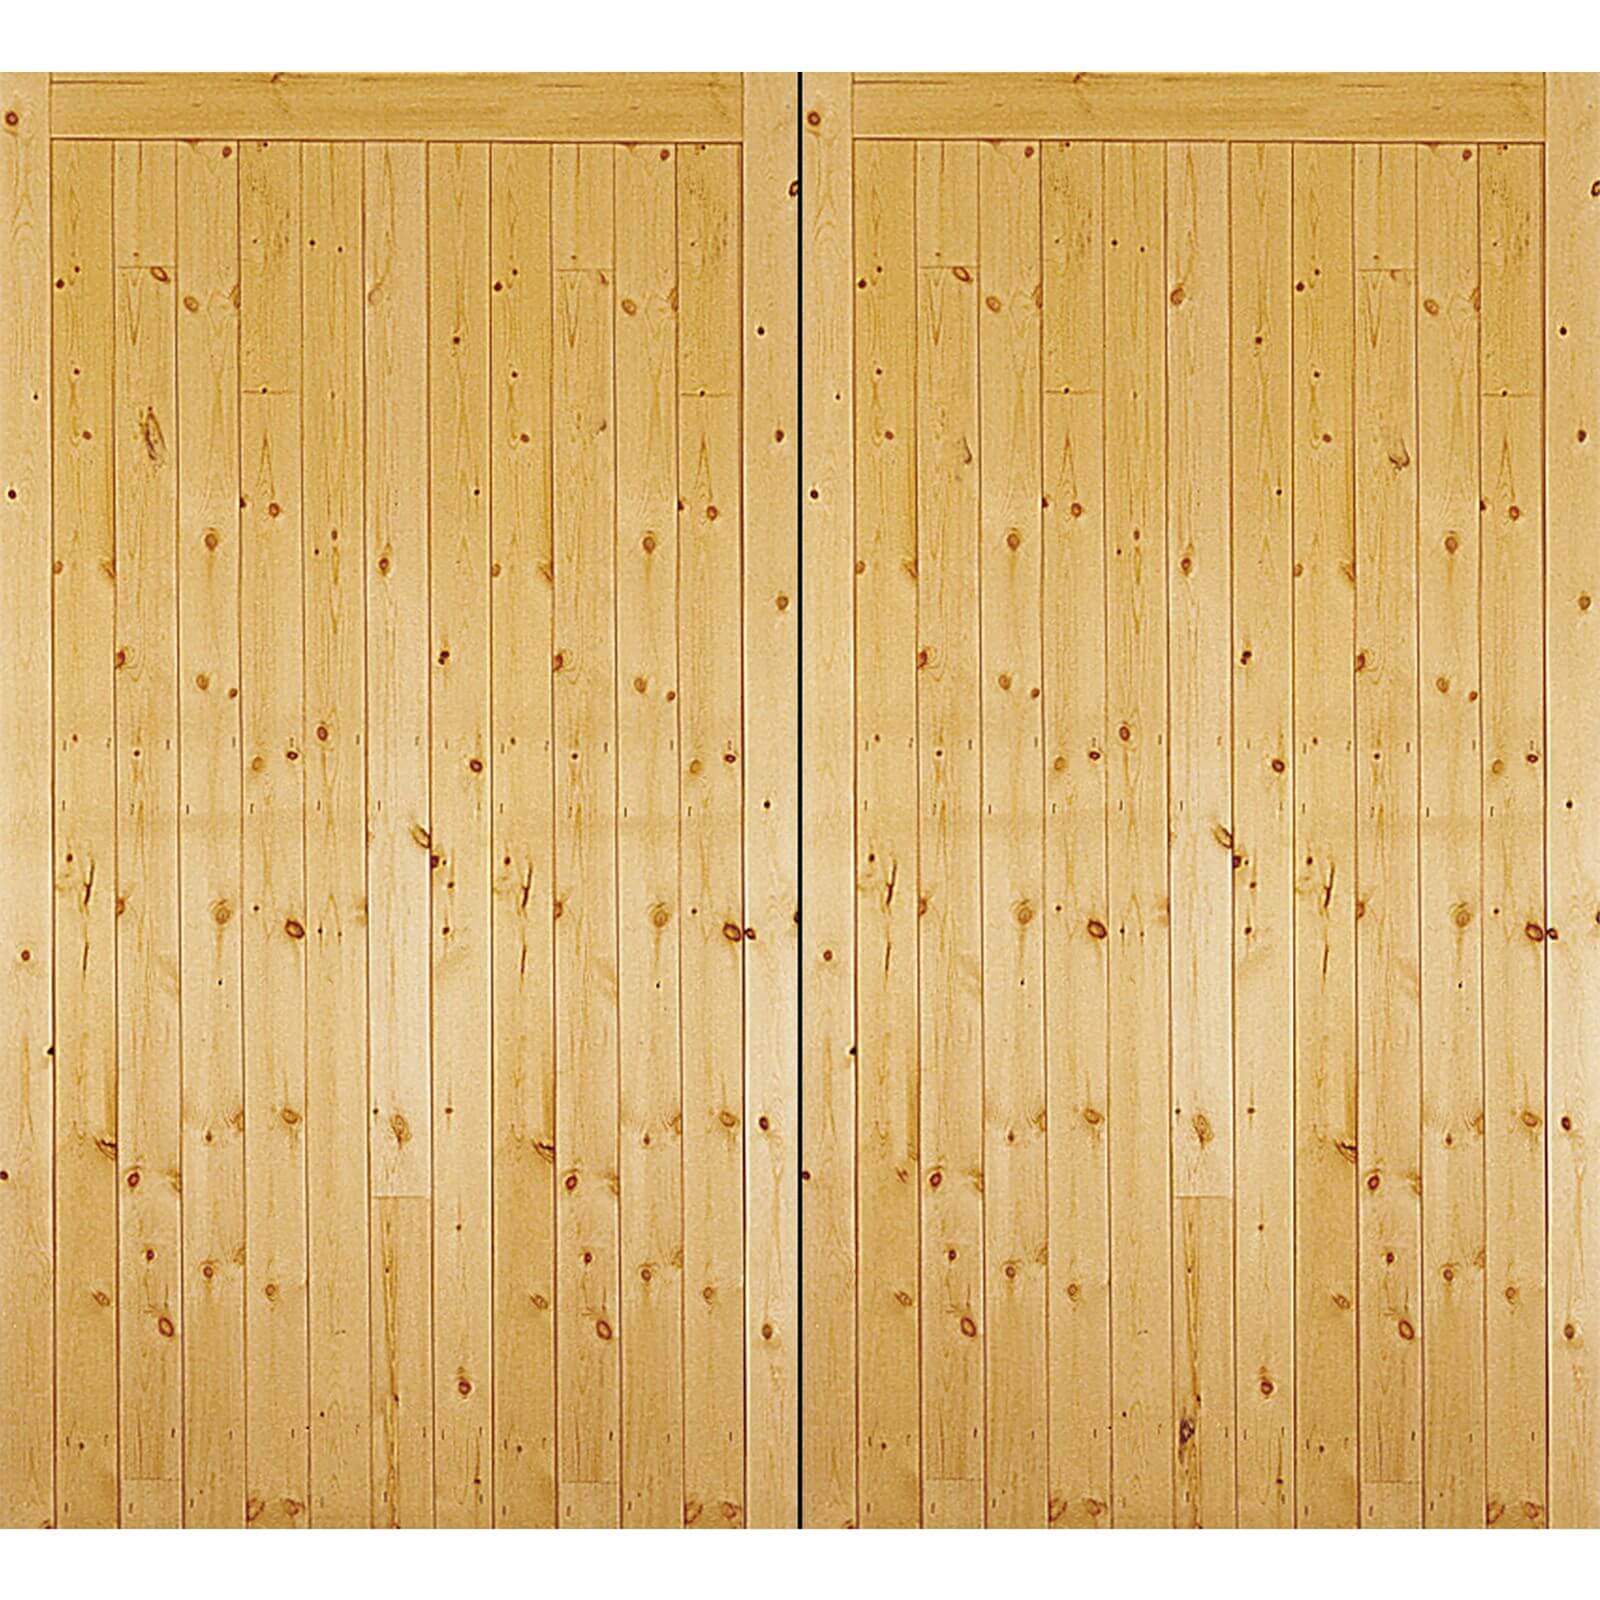 Timber Side Hung Garage Door - 2134mm Wide & 2134mm High